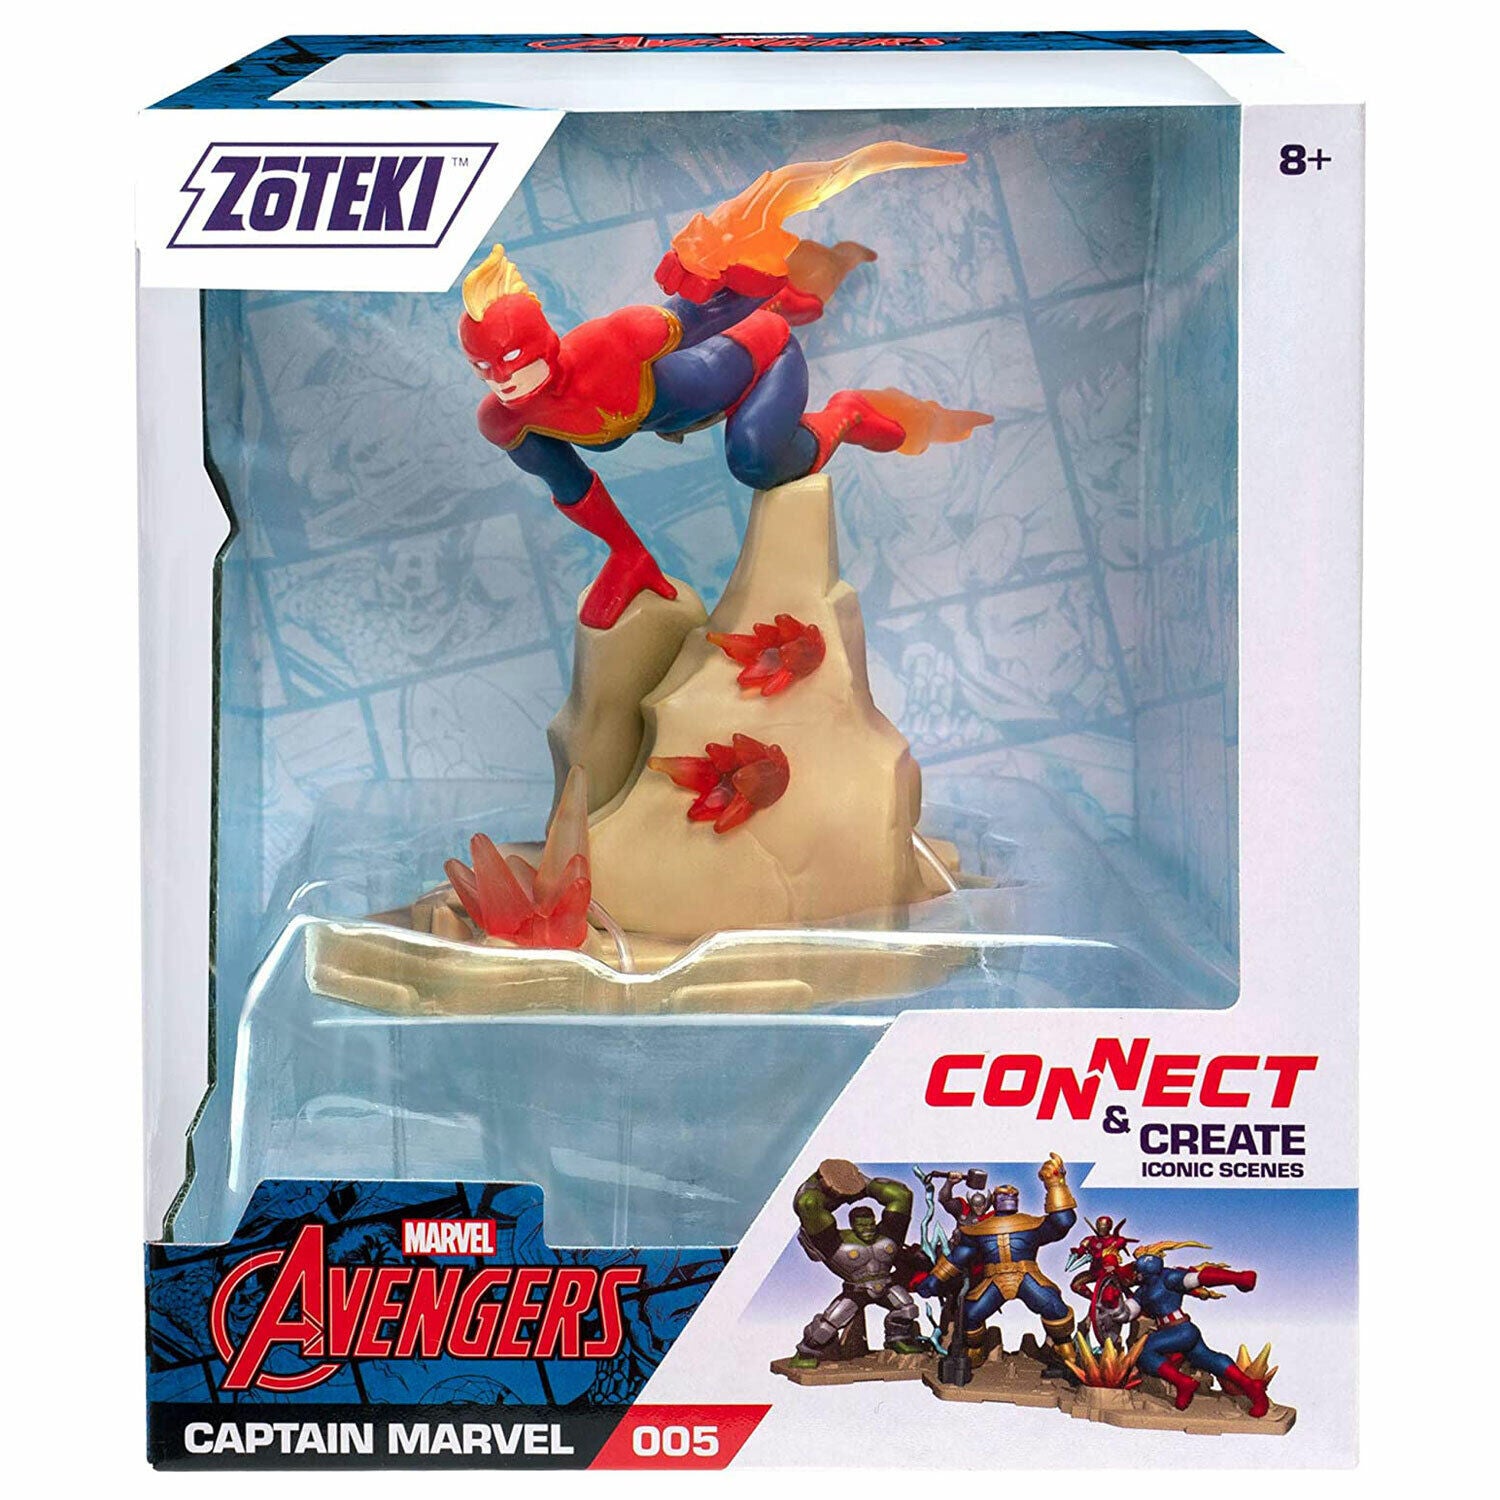 Zoteki Marvel Avengers Collectible Figure - Captain Marvel #005 - 4-Inch